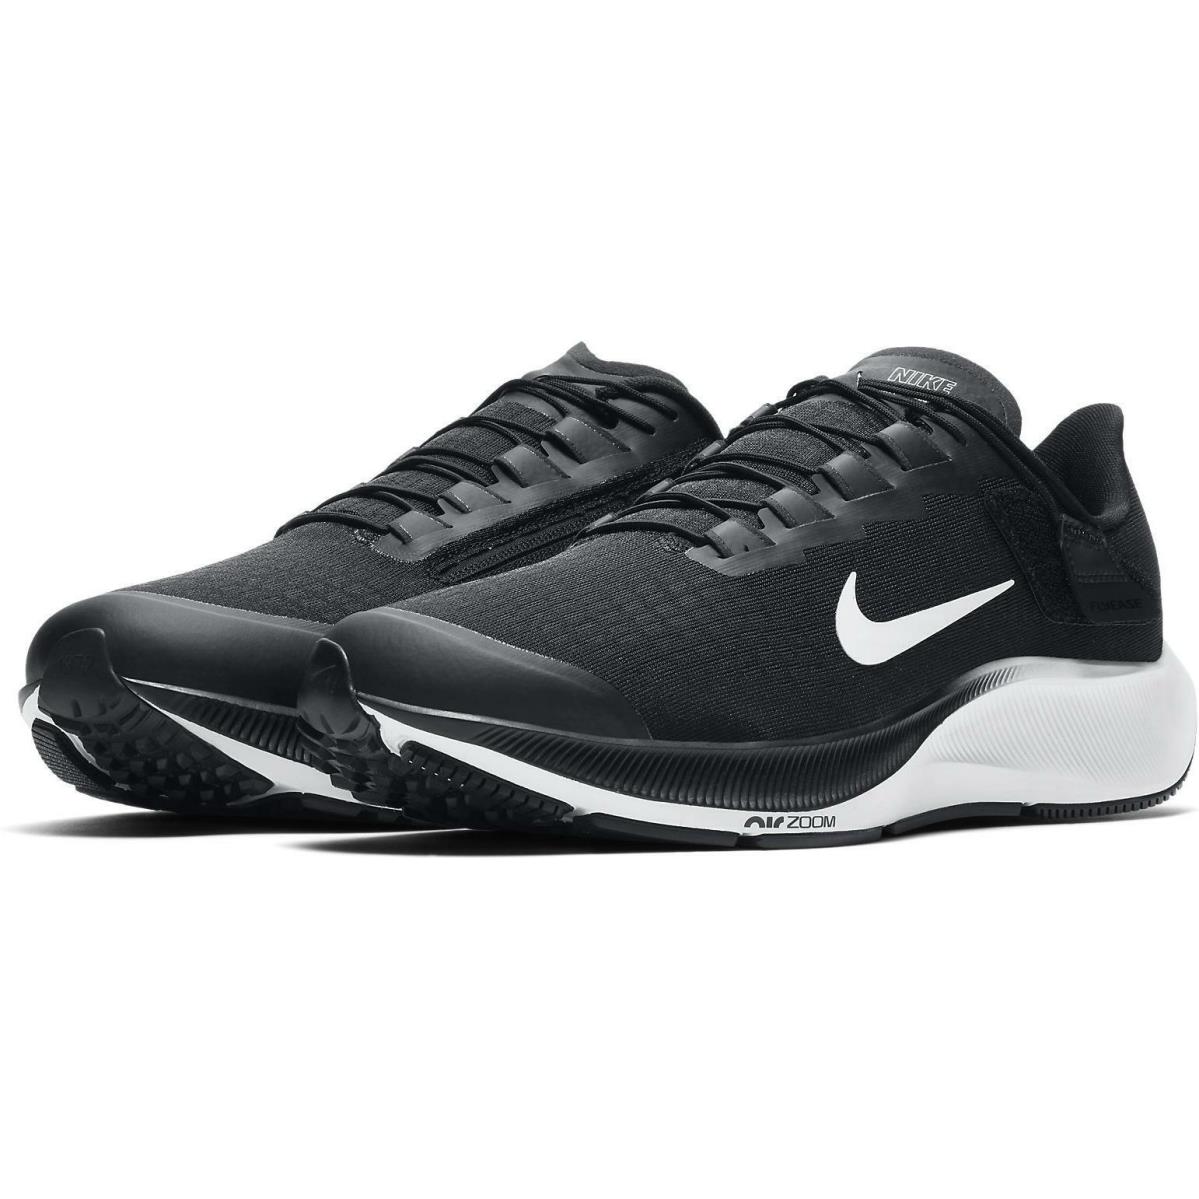 Nike Air Zoom Pegasus 37 Flyease 4E Mens Running Shoes Black CK8446 003 Sz 7.5 Black/White-Smoke Grey